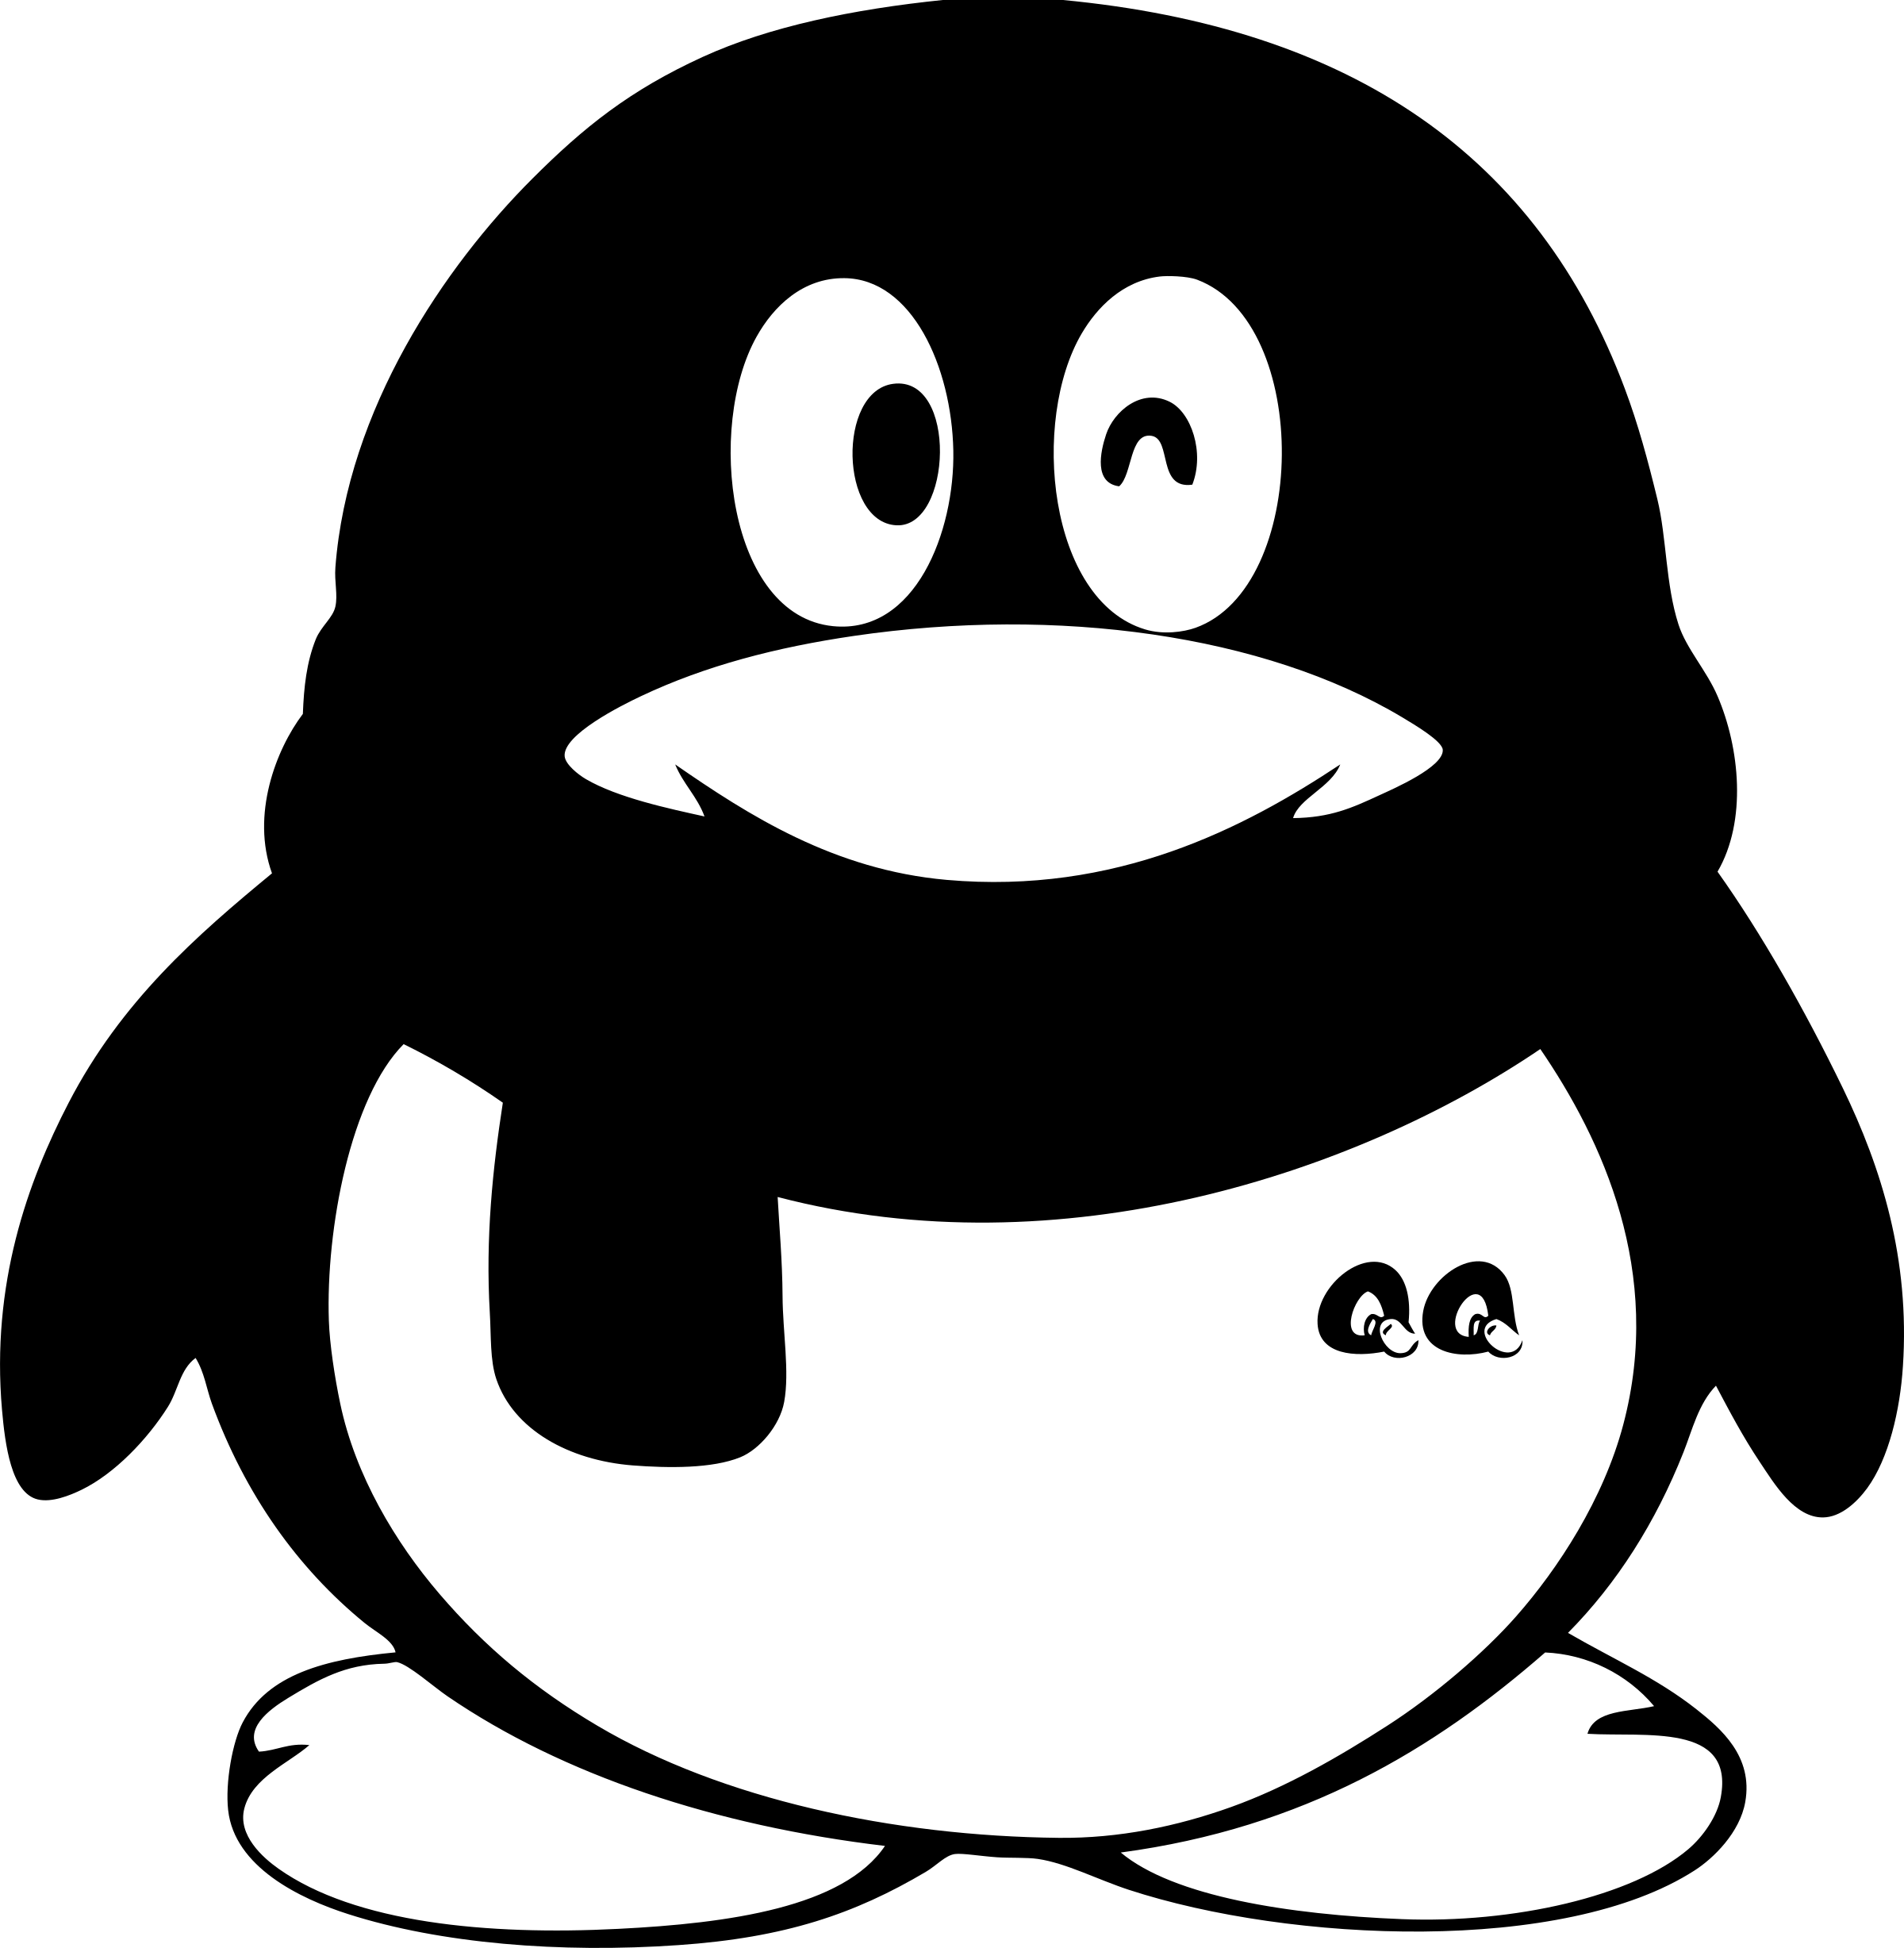 QQ icon Logo PNG Transparent & SVG Vector.